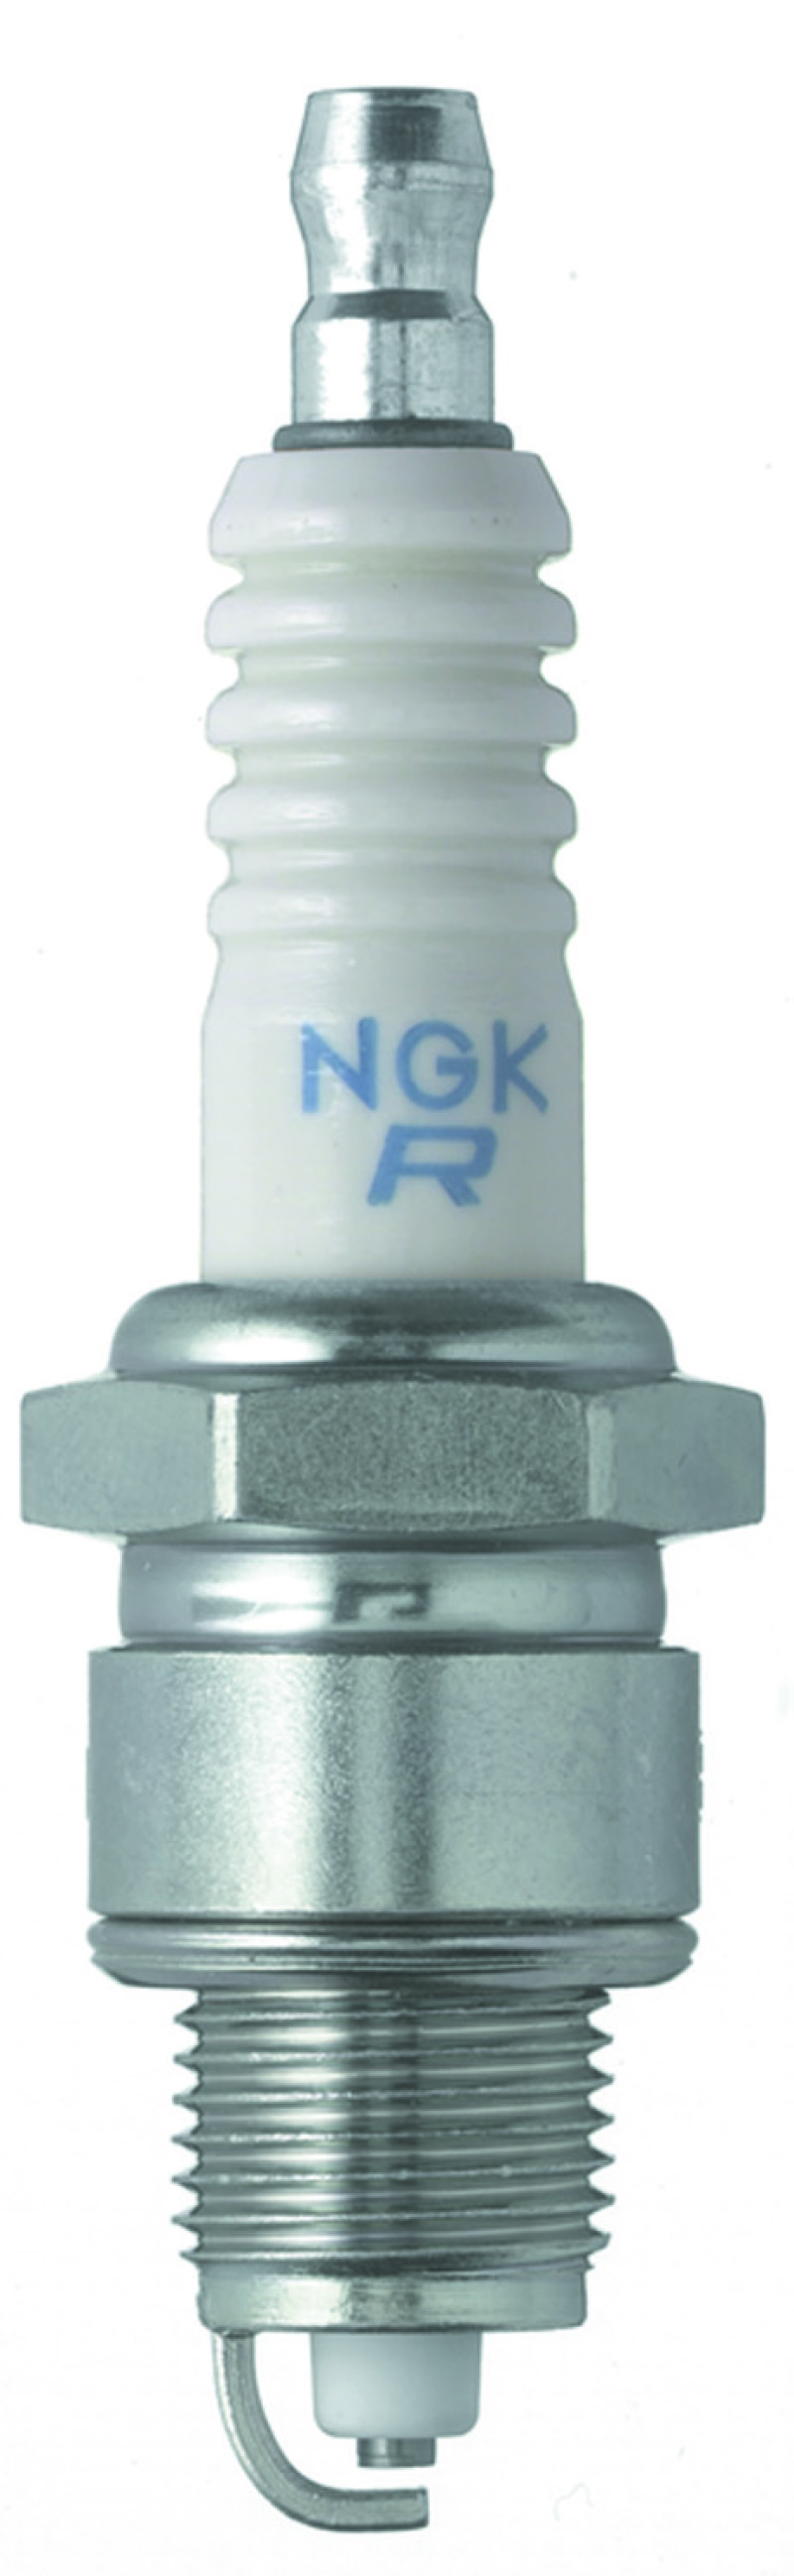 NGK Standard Spark Plug Box of 10 (BPR4HS-10) - 5024